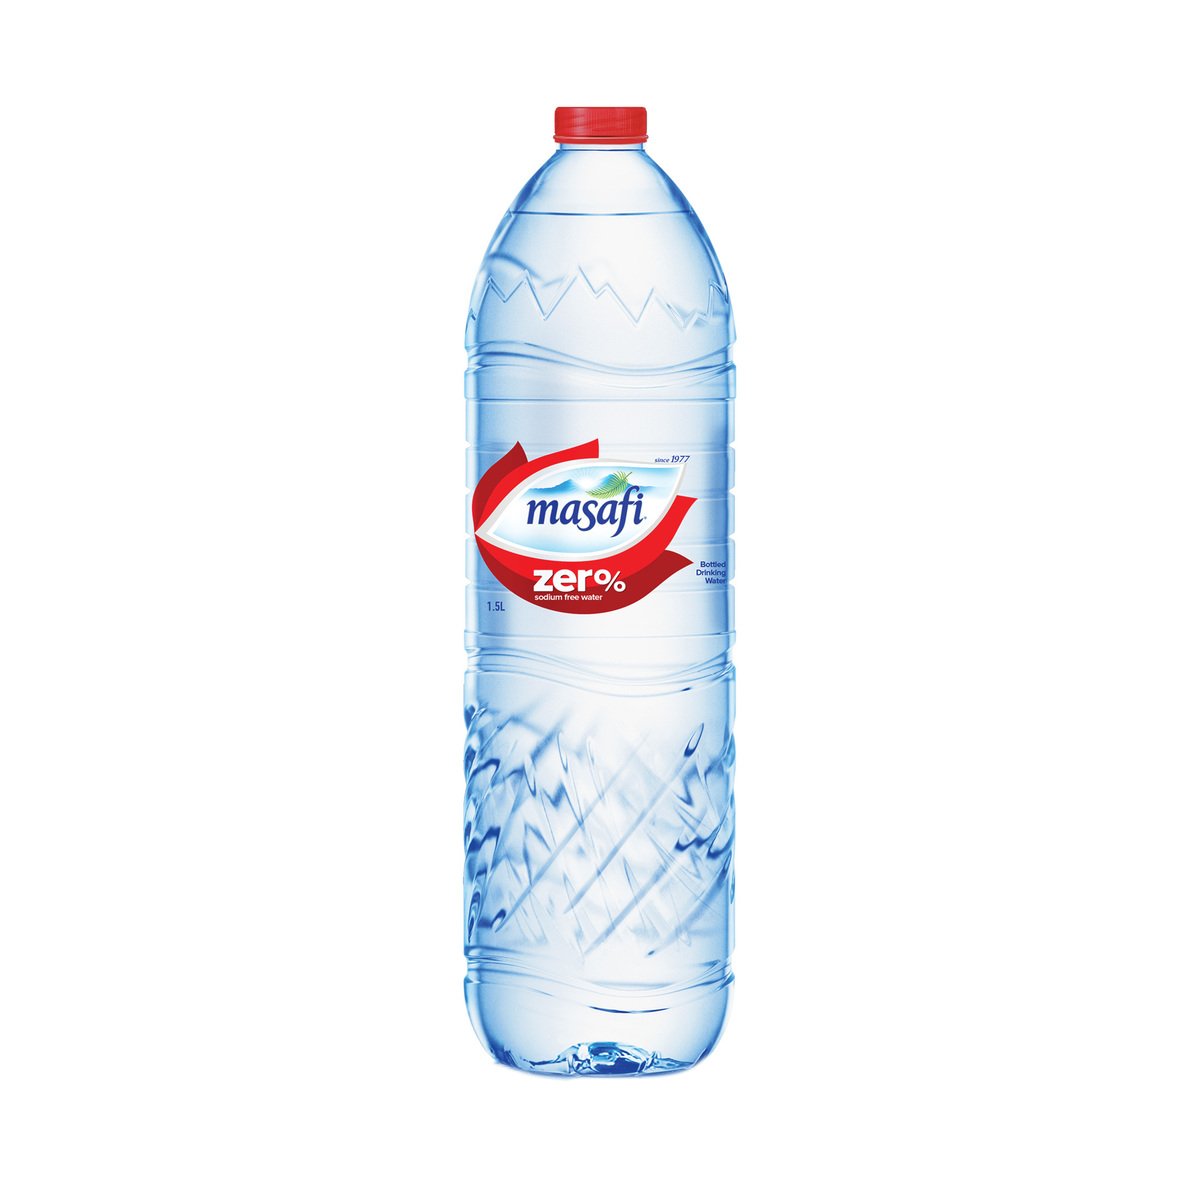 Masafi Zero% Sodium Free Water 12 x 1.5 Litres